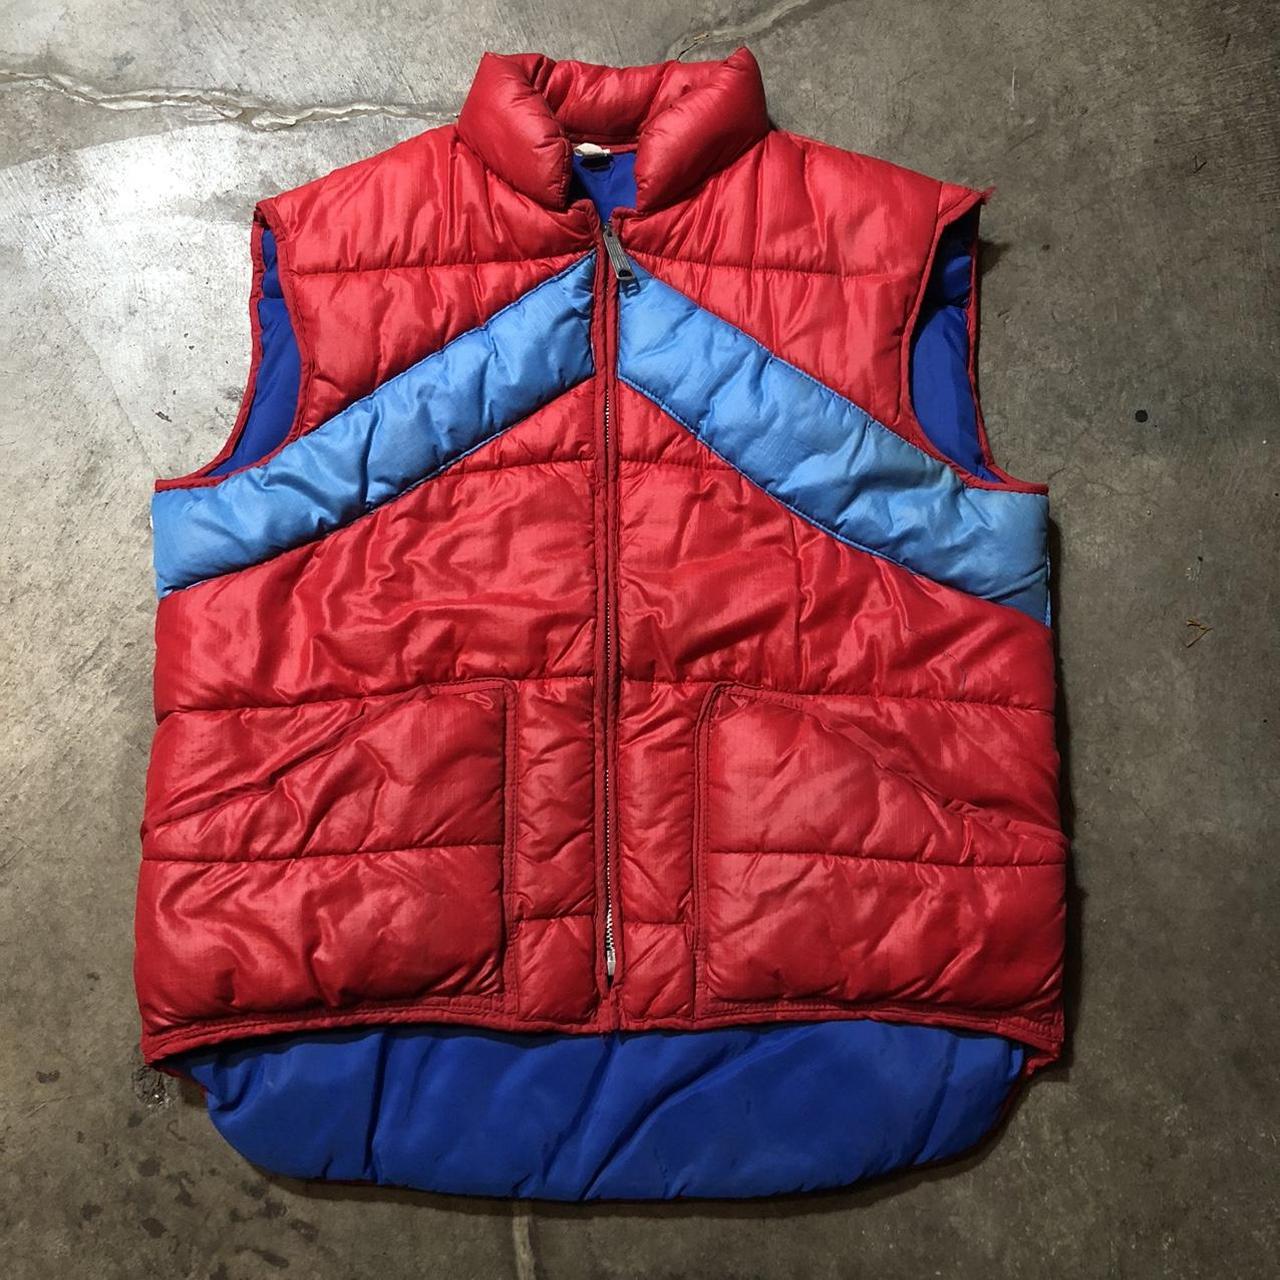 Vintage 70s colorblocked puffer vest. Red and blue - Depop